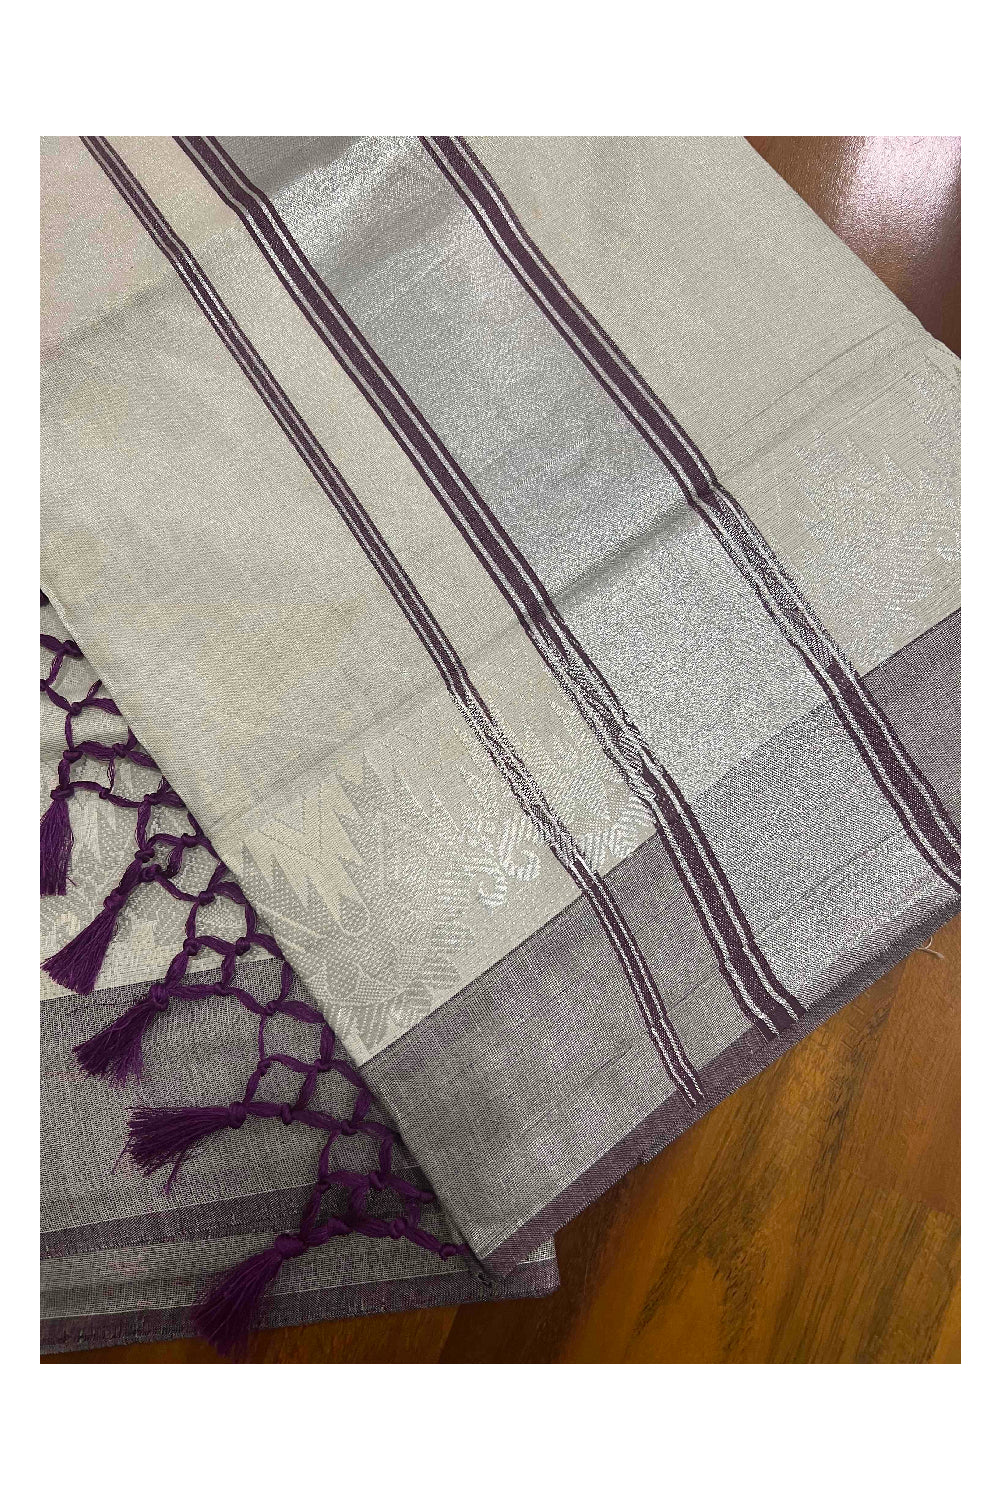 Kerala Silver Tissue Plain Saree with Purple and Silver Border